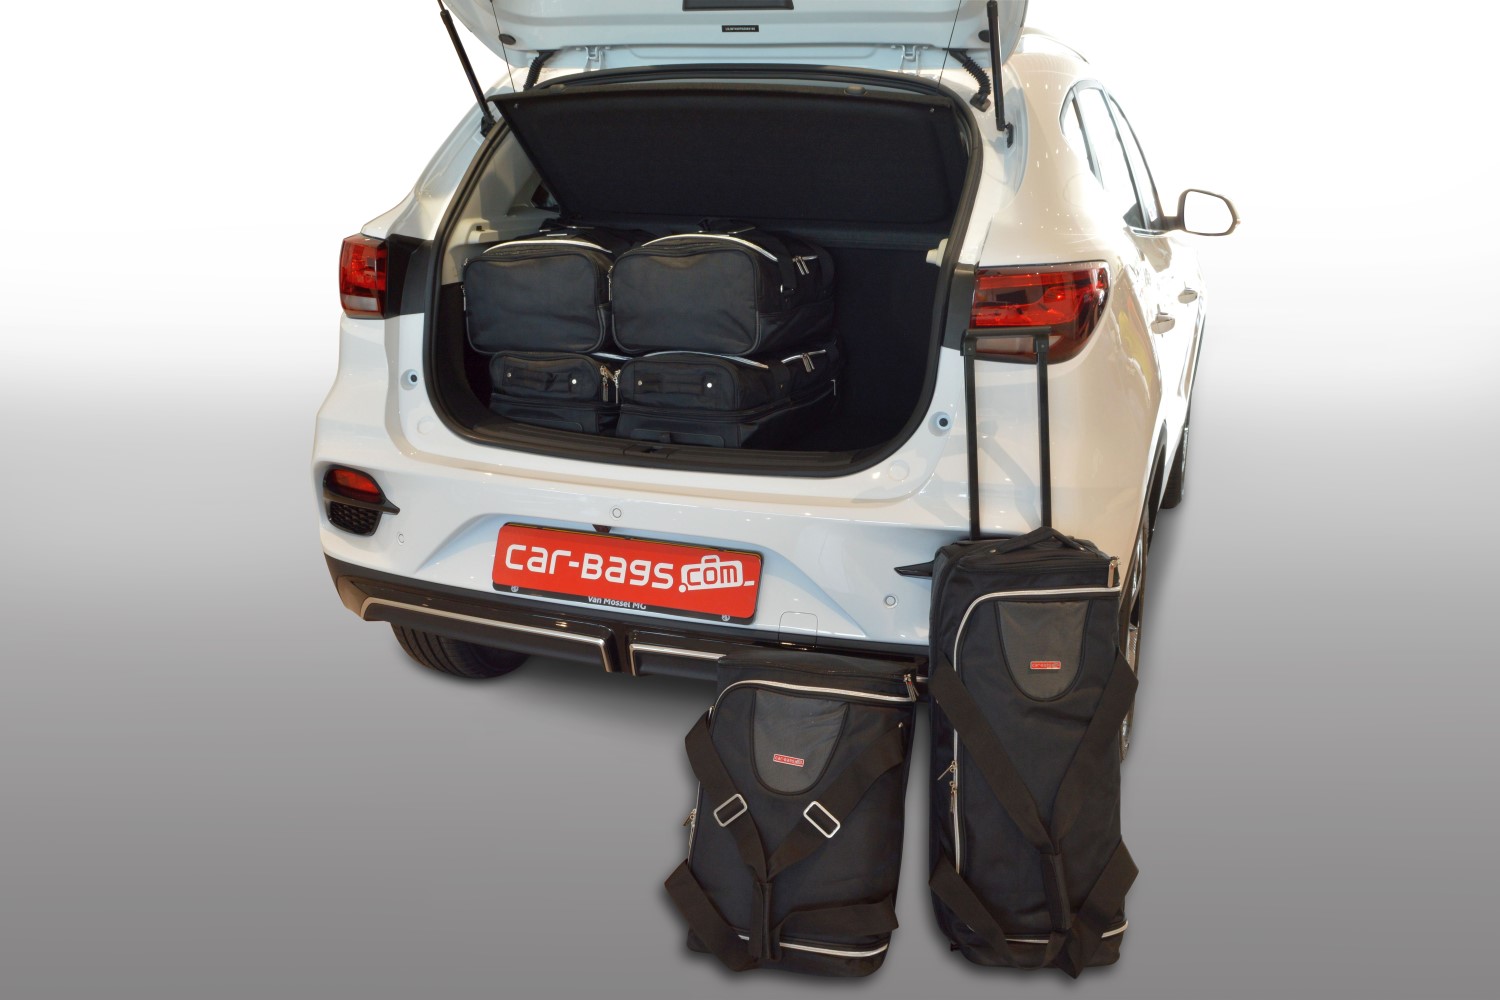 https://www.car-bags.com/images/stories/virtuemart/product/m50101s-mg-zs-ev-2020-car-bags-1.jpg